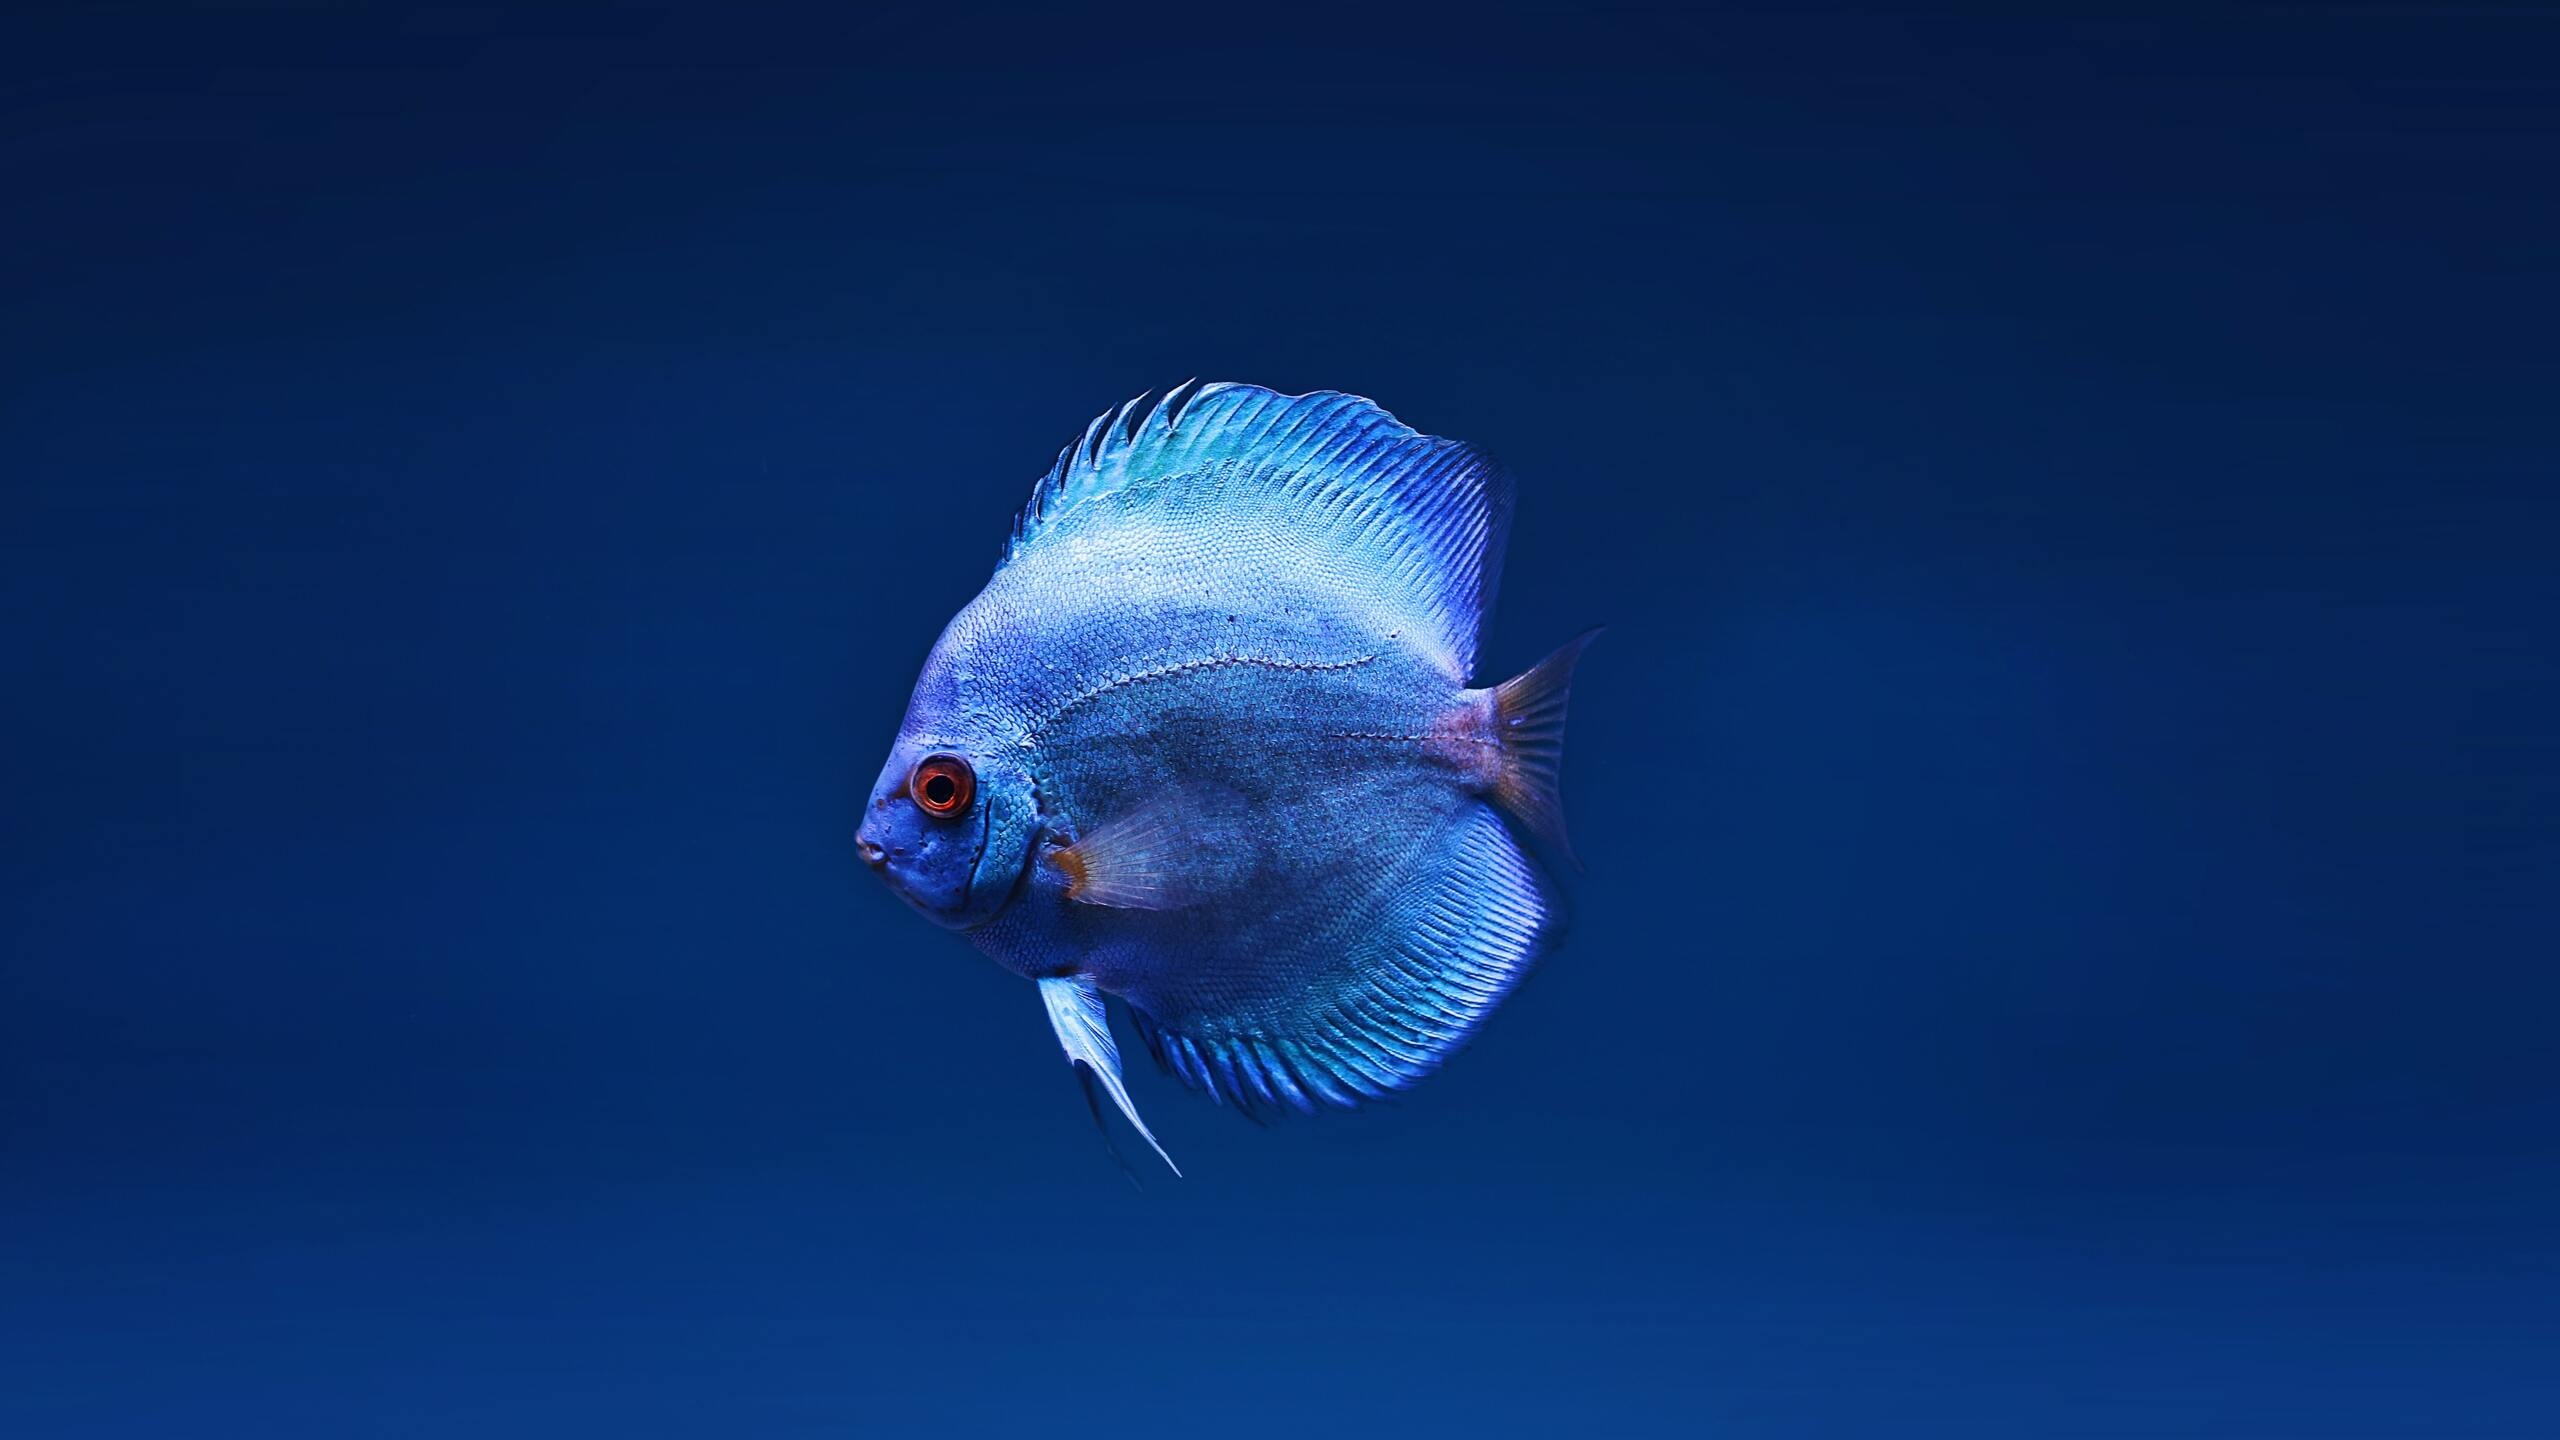 Blue discus fish, 1440p quality, Mesmerizing images, Stunning colors, 2560x1440 HD Desktop